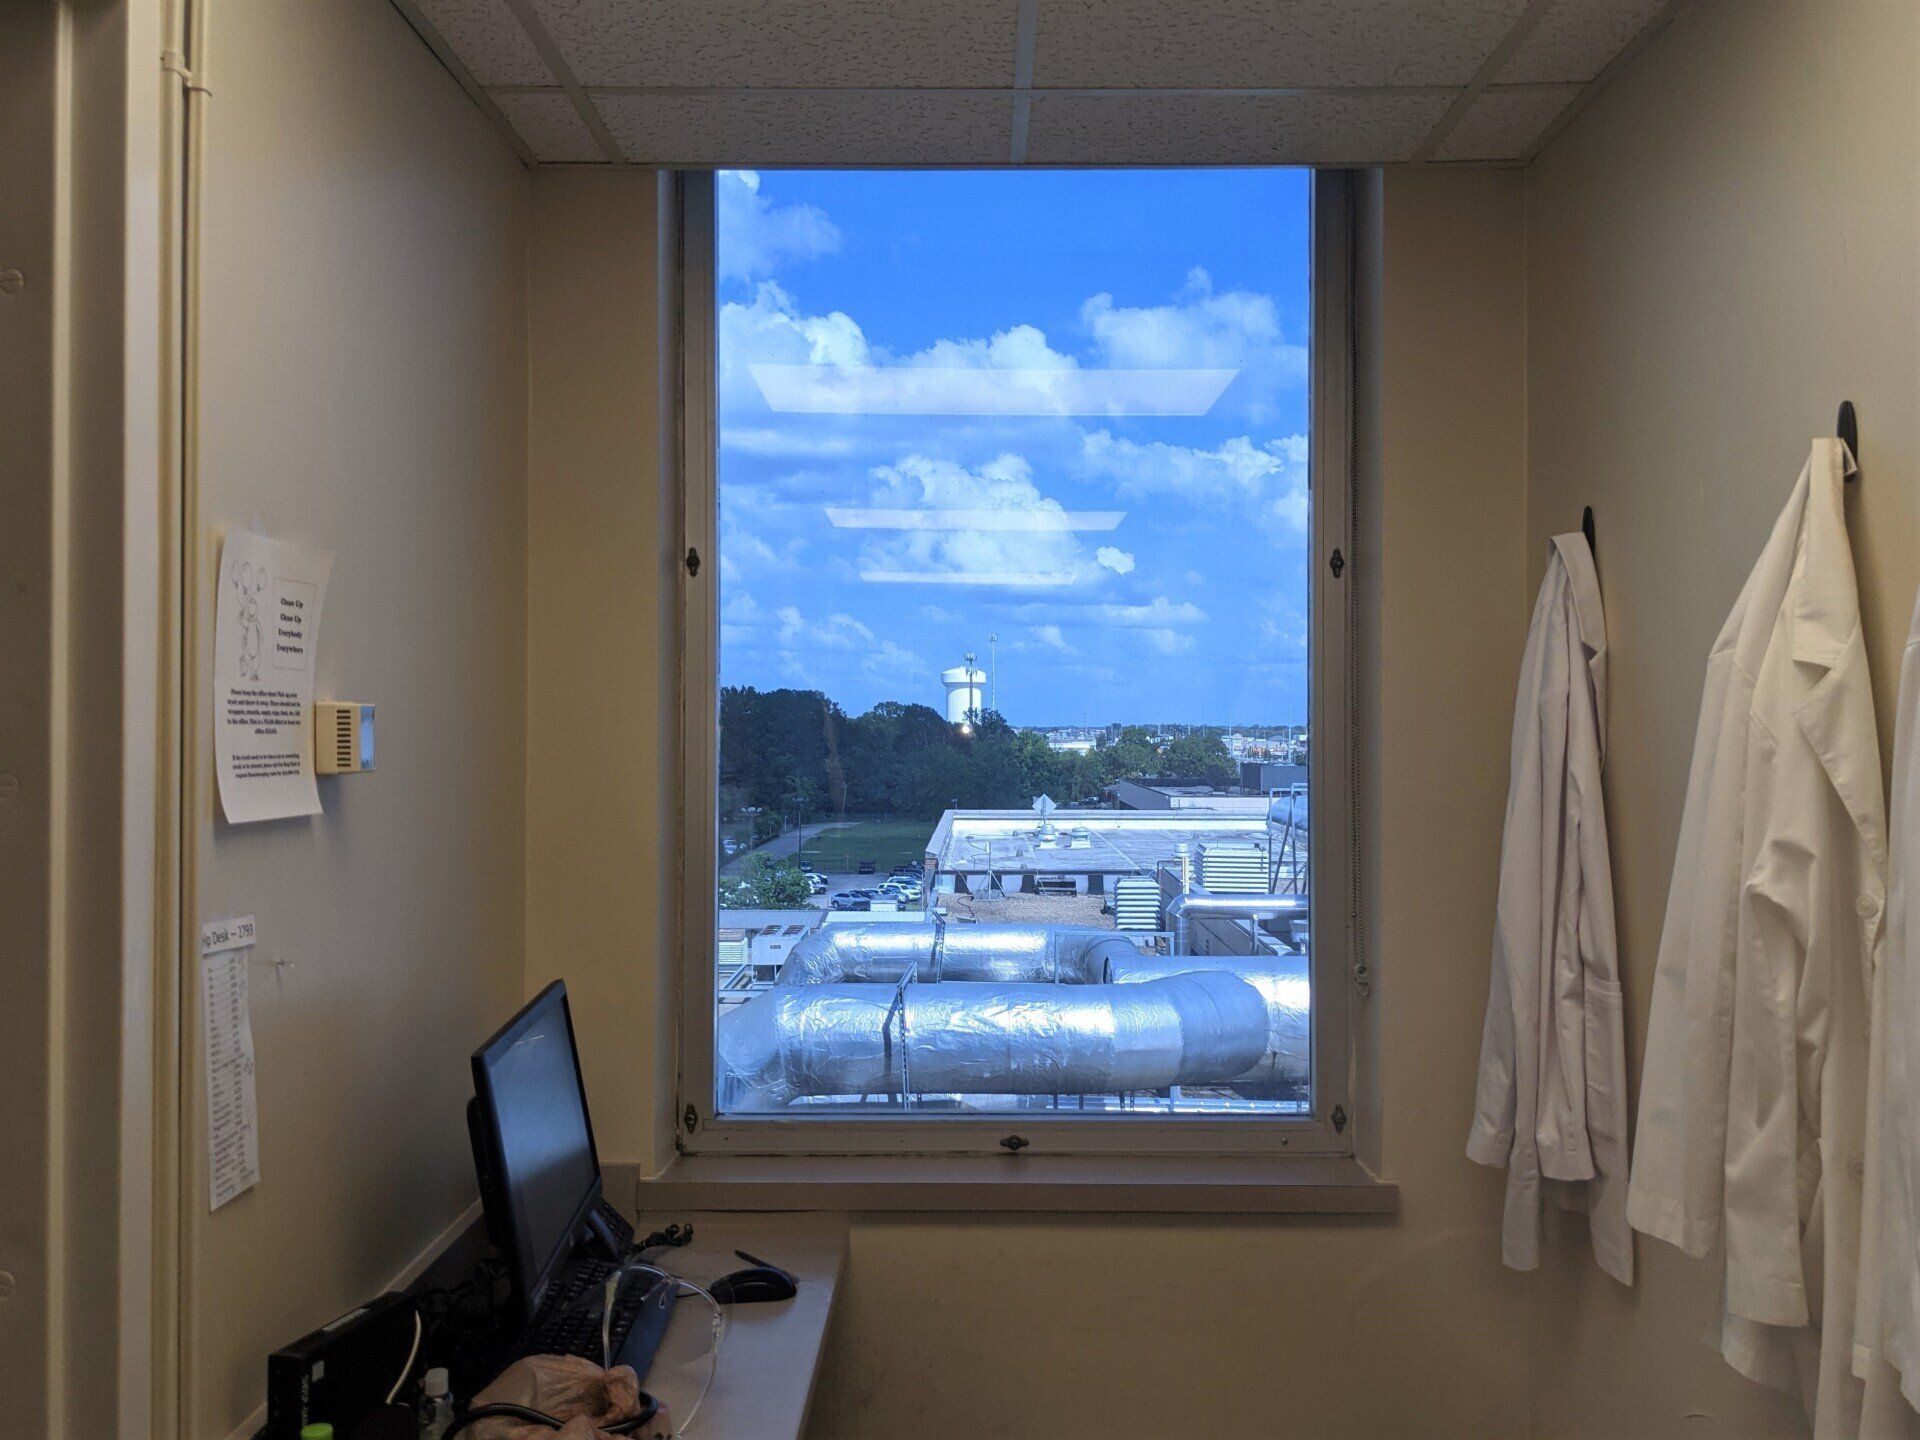 Business window tinting in Montgomery AL - SPF Performance Ultra Tint Blocked 91% Heat & Bright Glare at Baptist Hospital in Montgomery AL